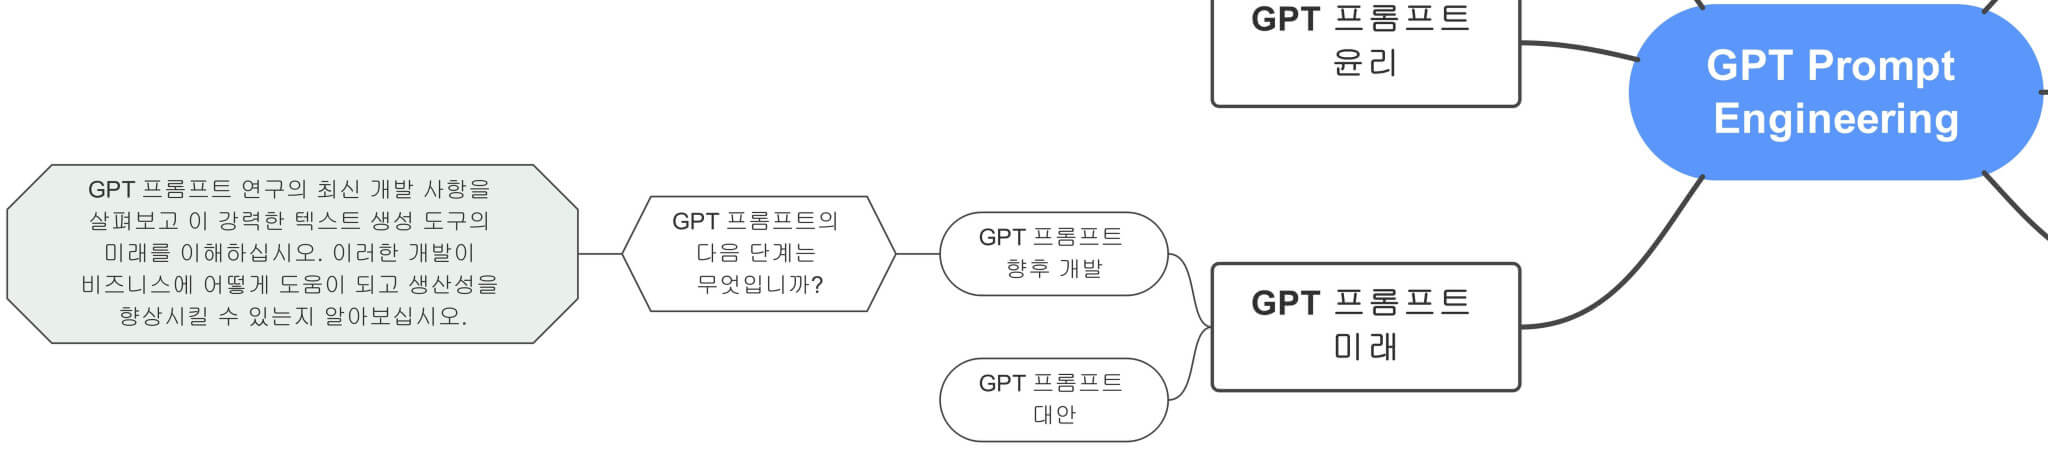 GPT_Prompt_Engineering에서_GPT_프롬프트_향후_개발까지_잘라낸_부분_마인드맵_연결도